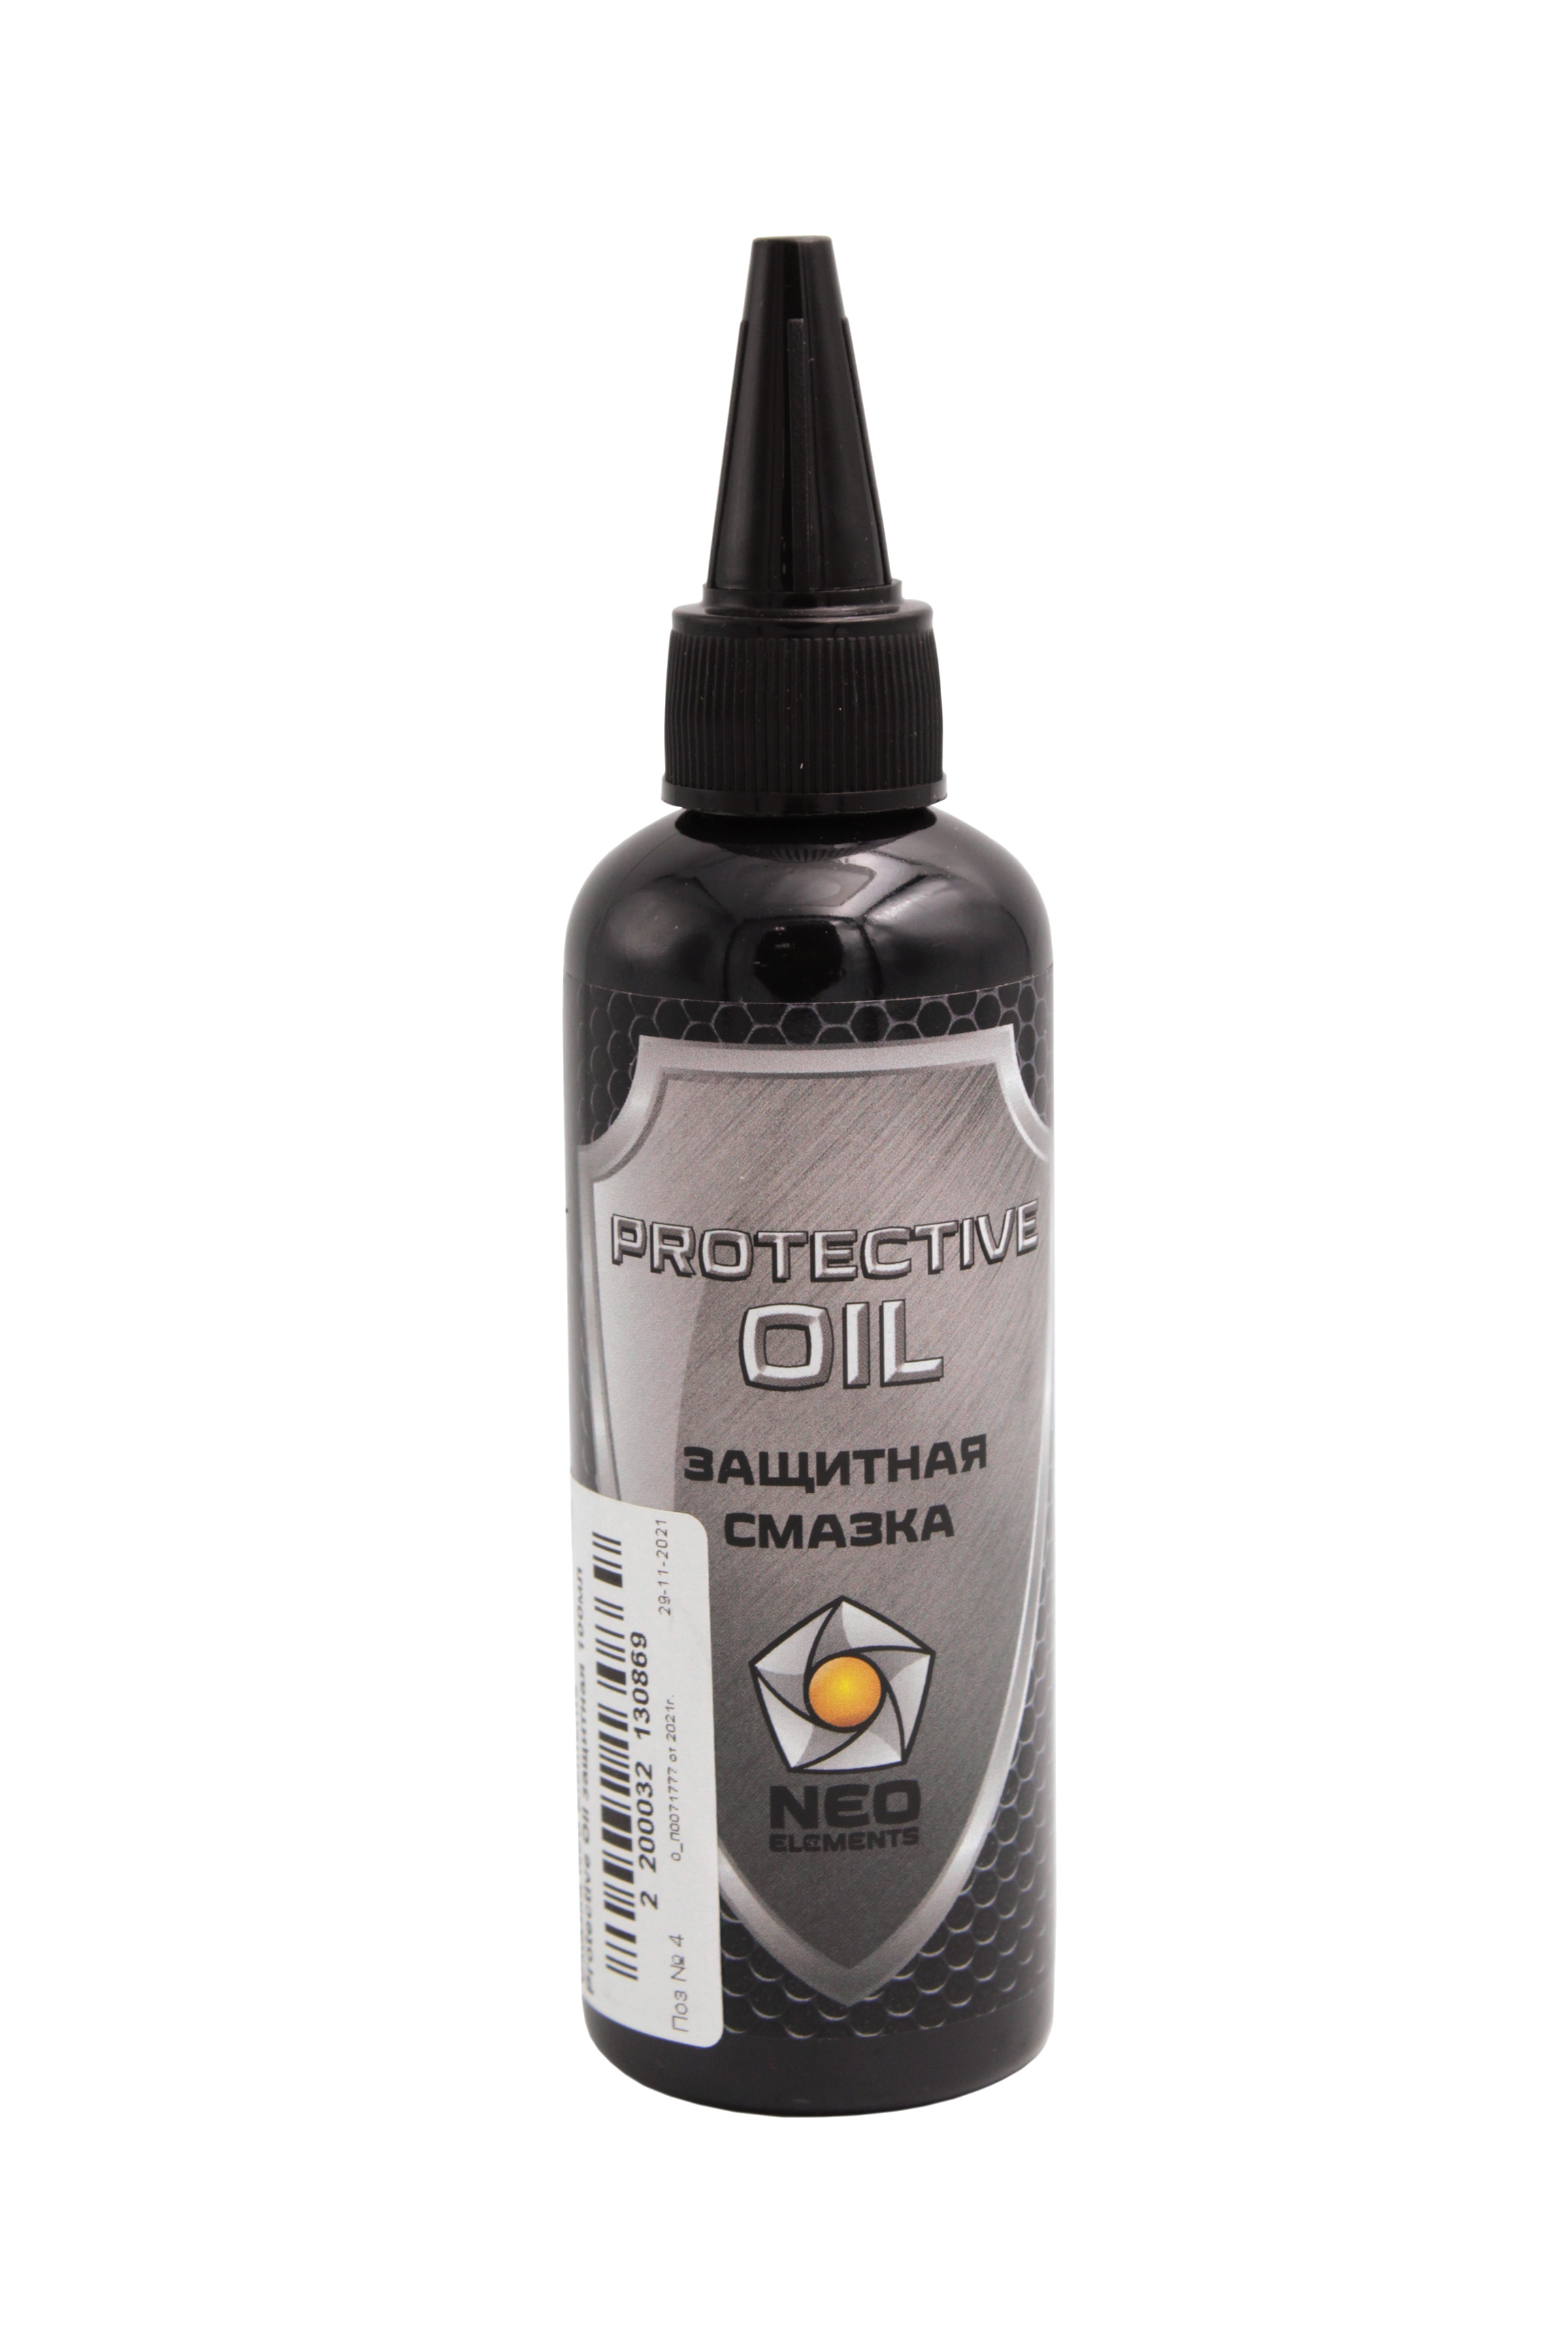 Смазка Neo Elements Protective Oil защитная 100мл